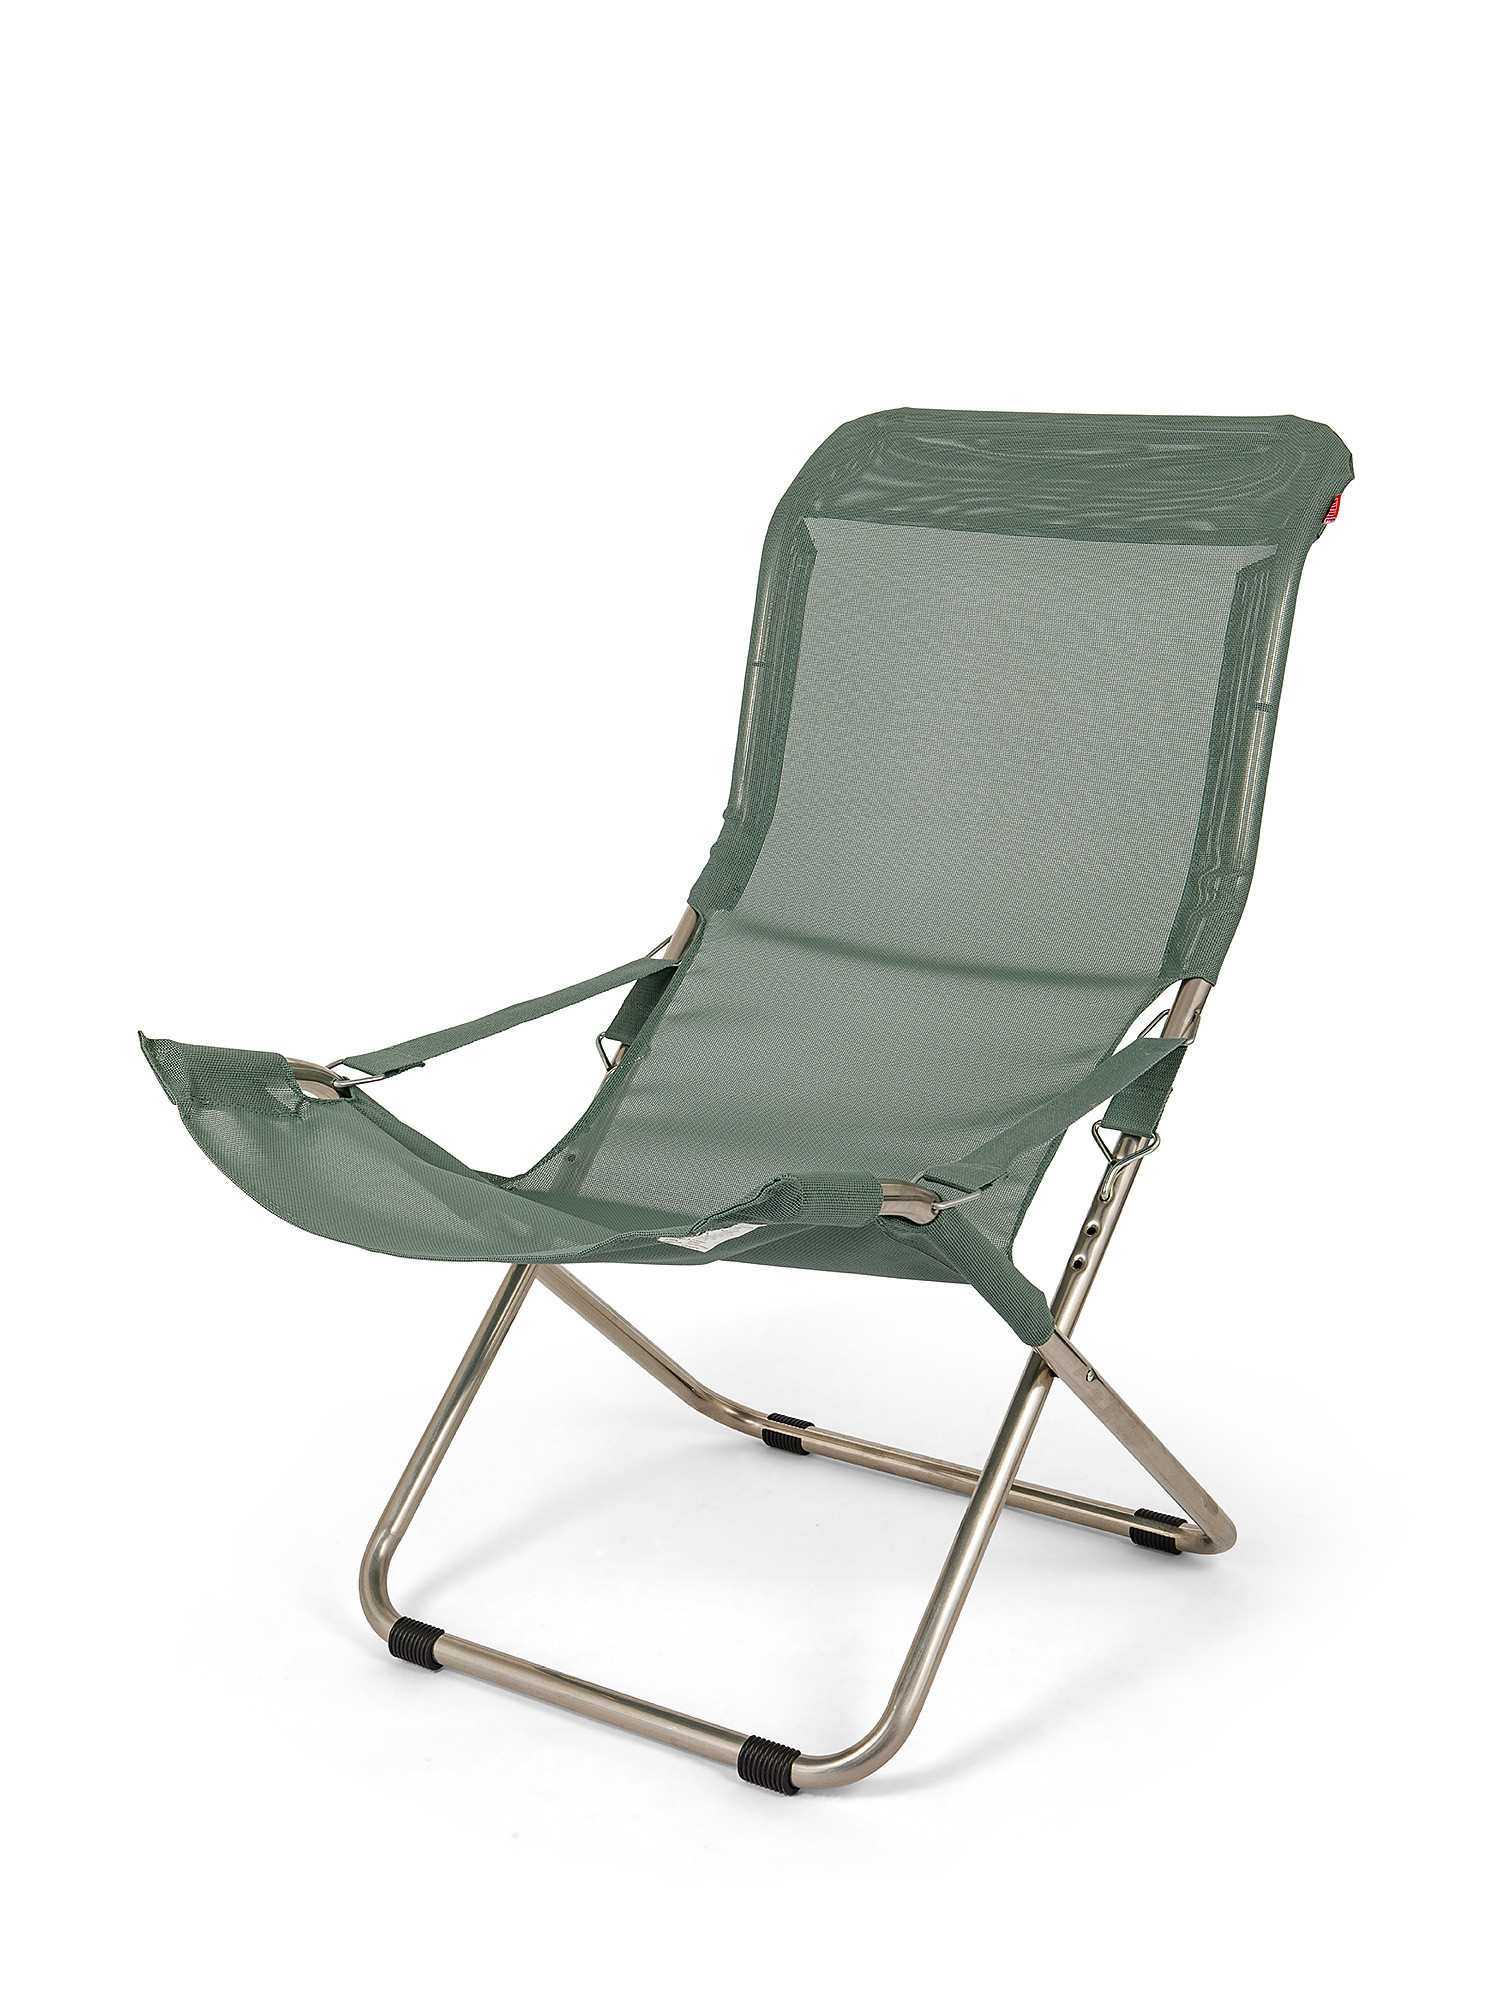 Fiam - Fiesta anatomic adjustable outdoor deck chair, Sage Green, large image number 0